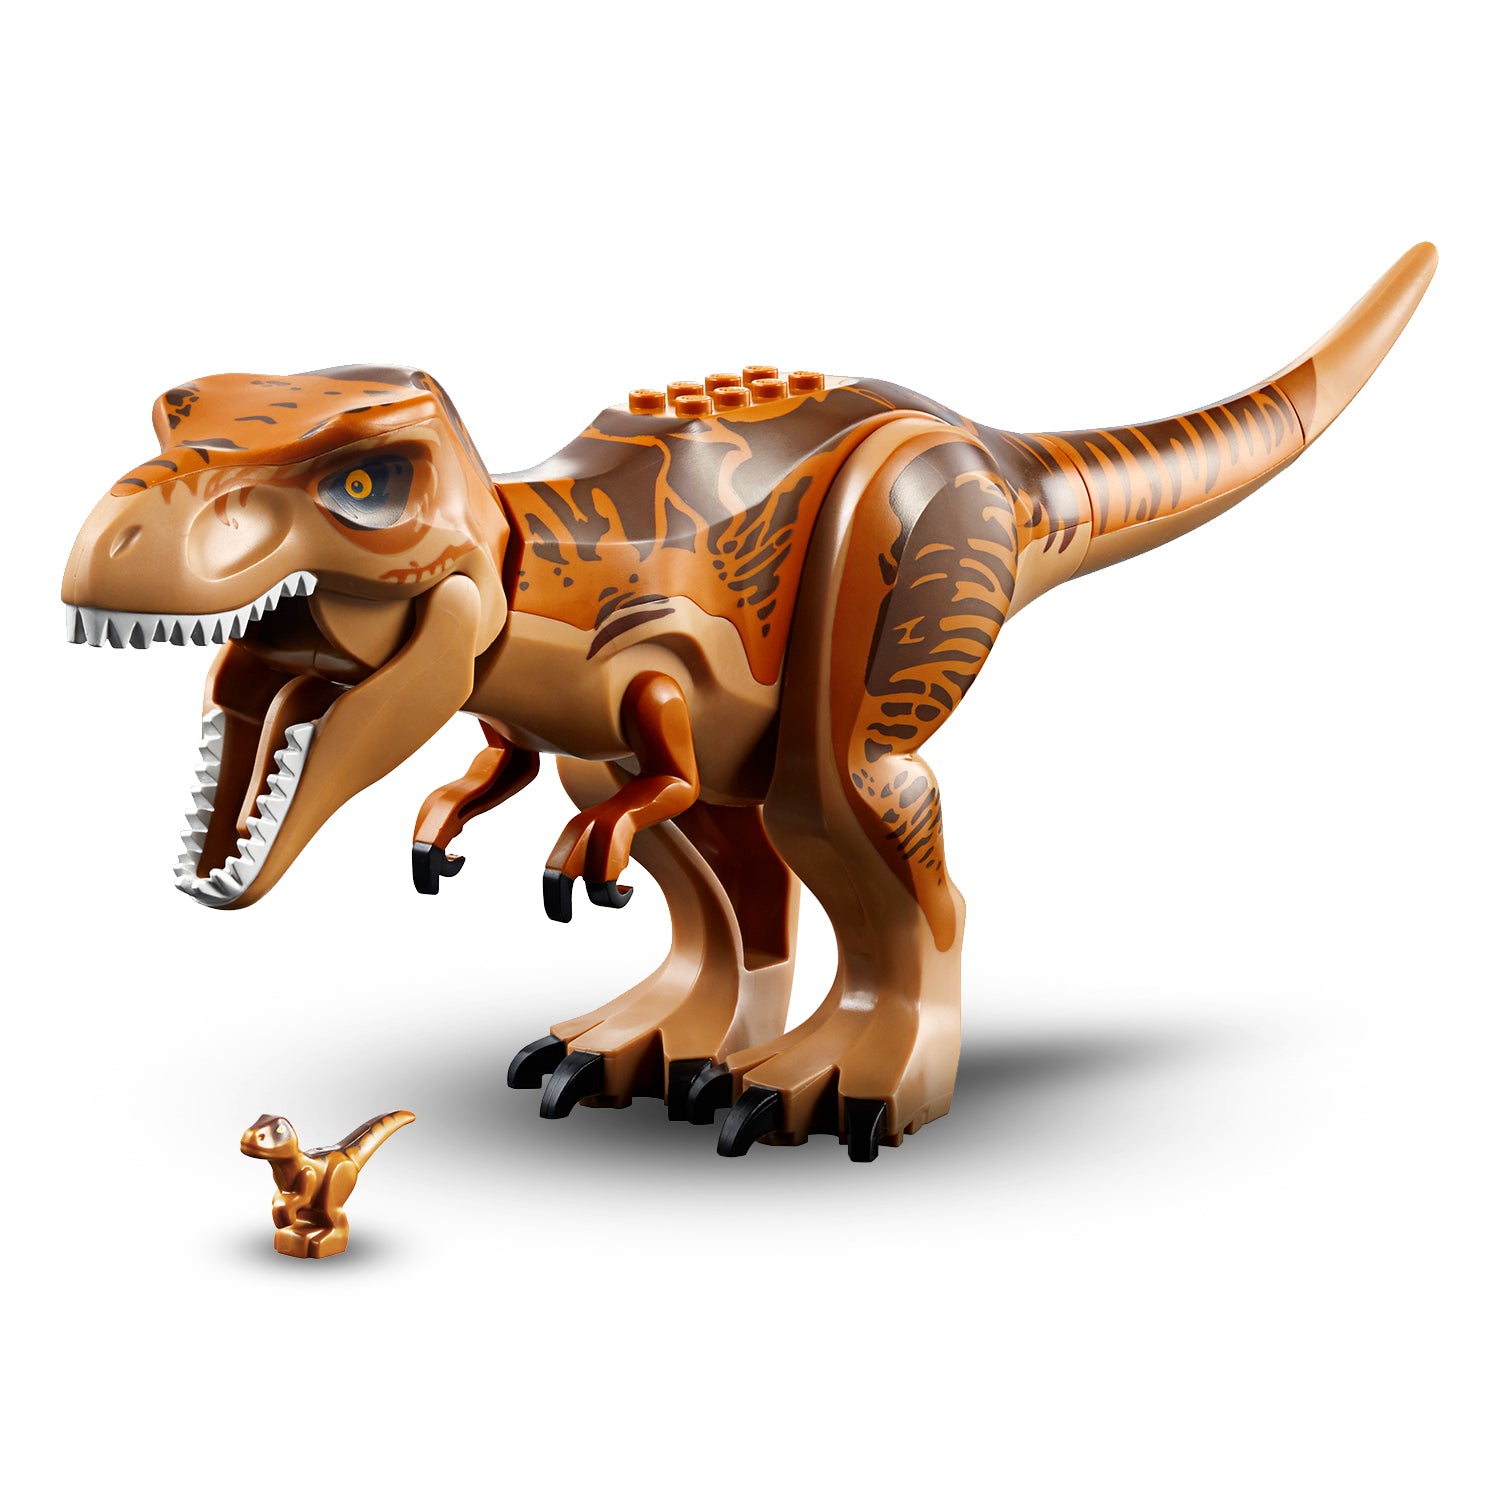 LEGO® 4+ Jurassic World T. Rex Breakout Set 10758 Default Title